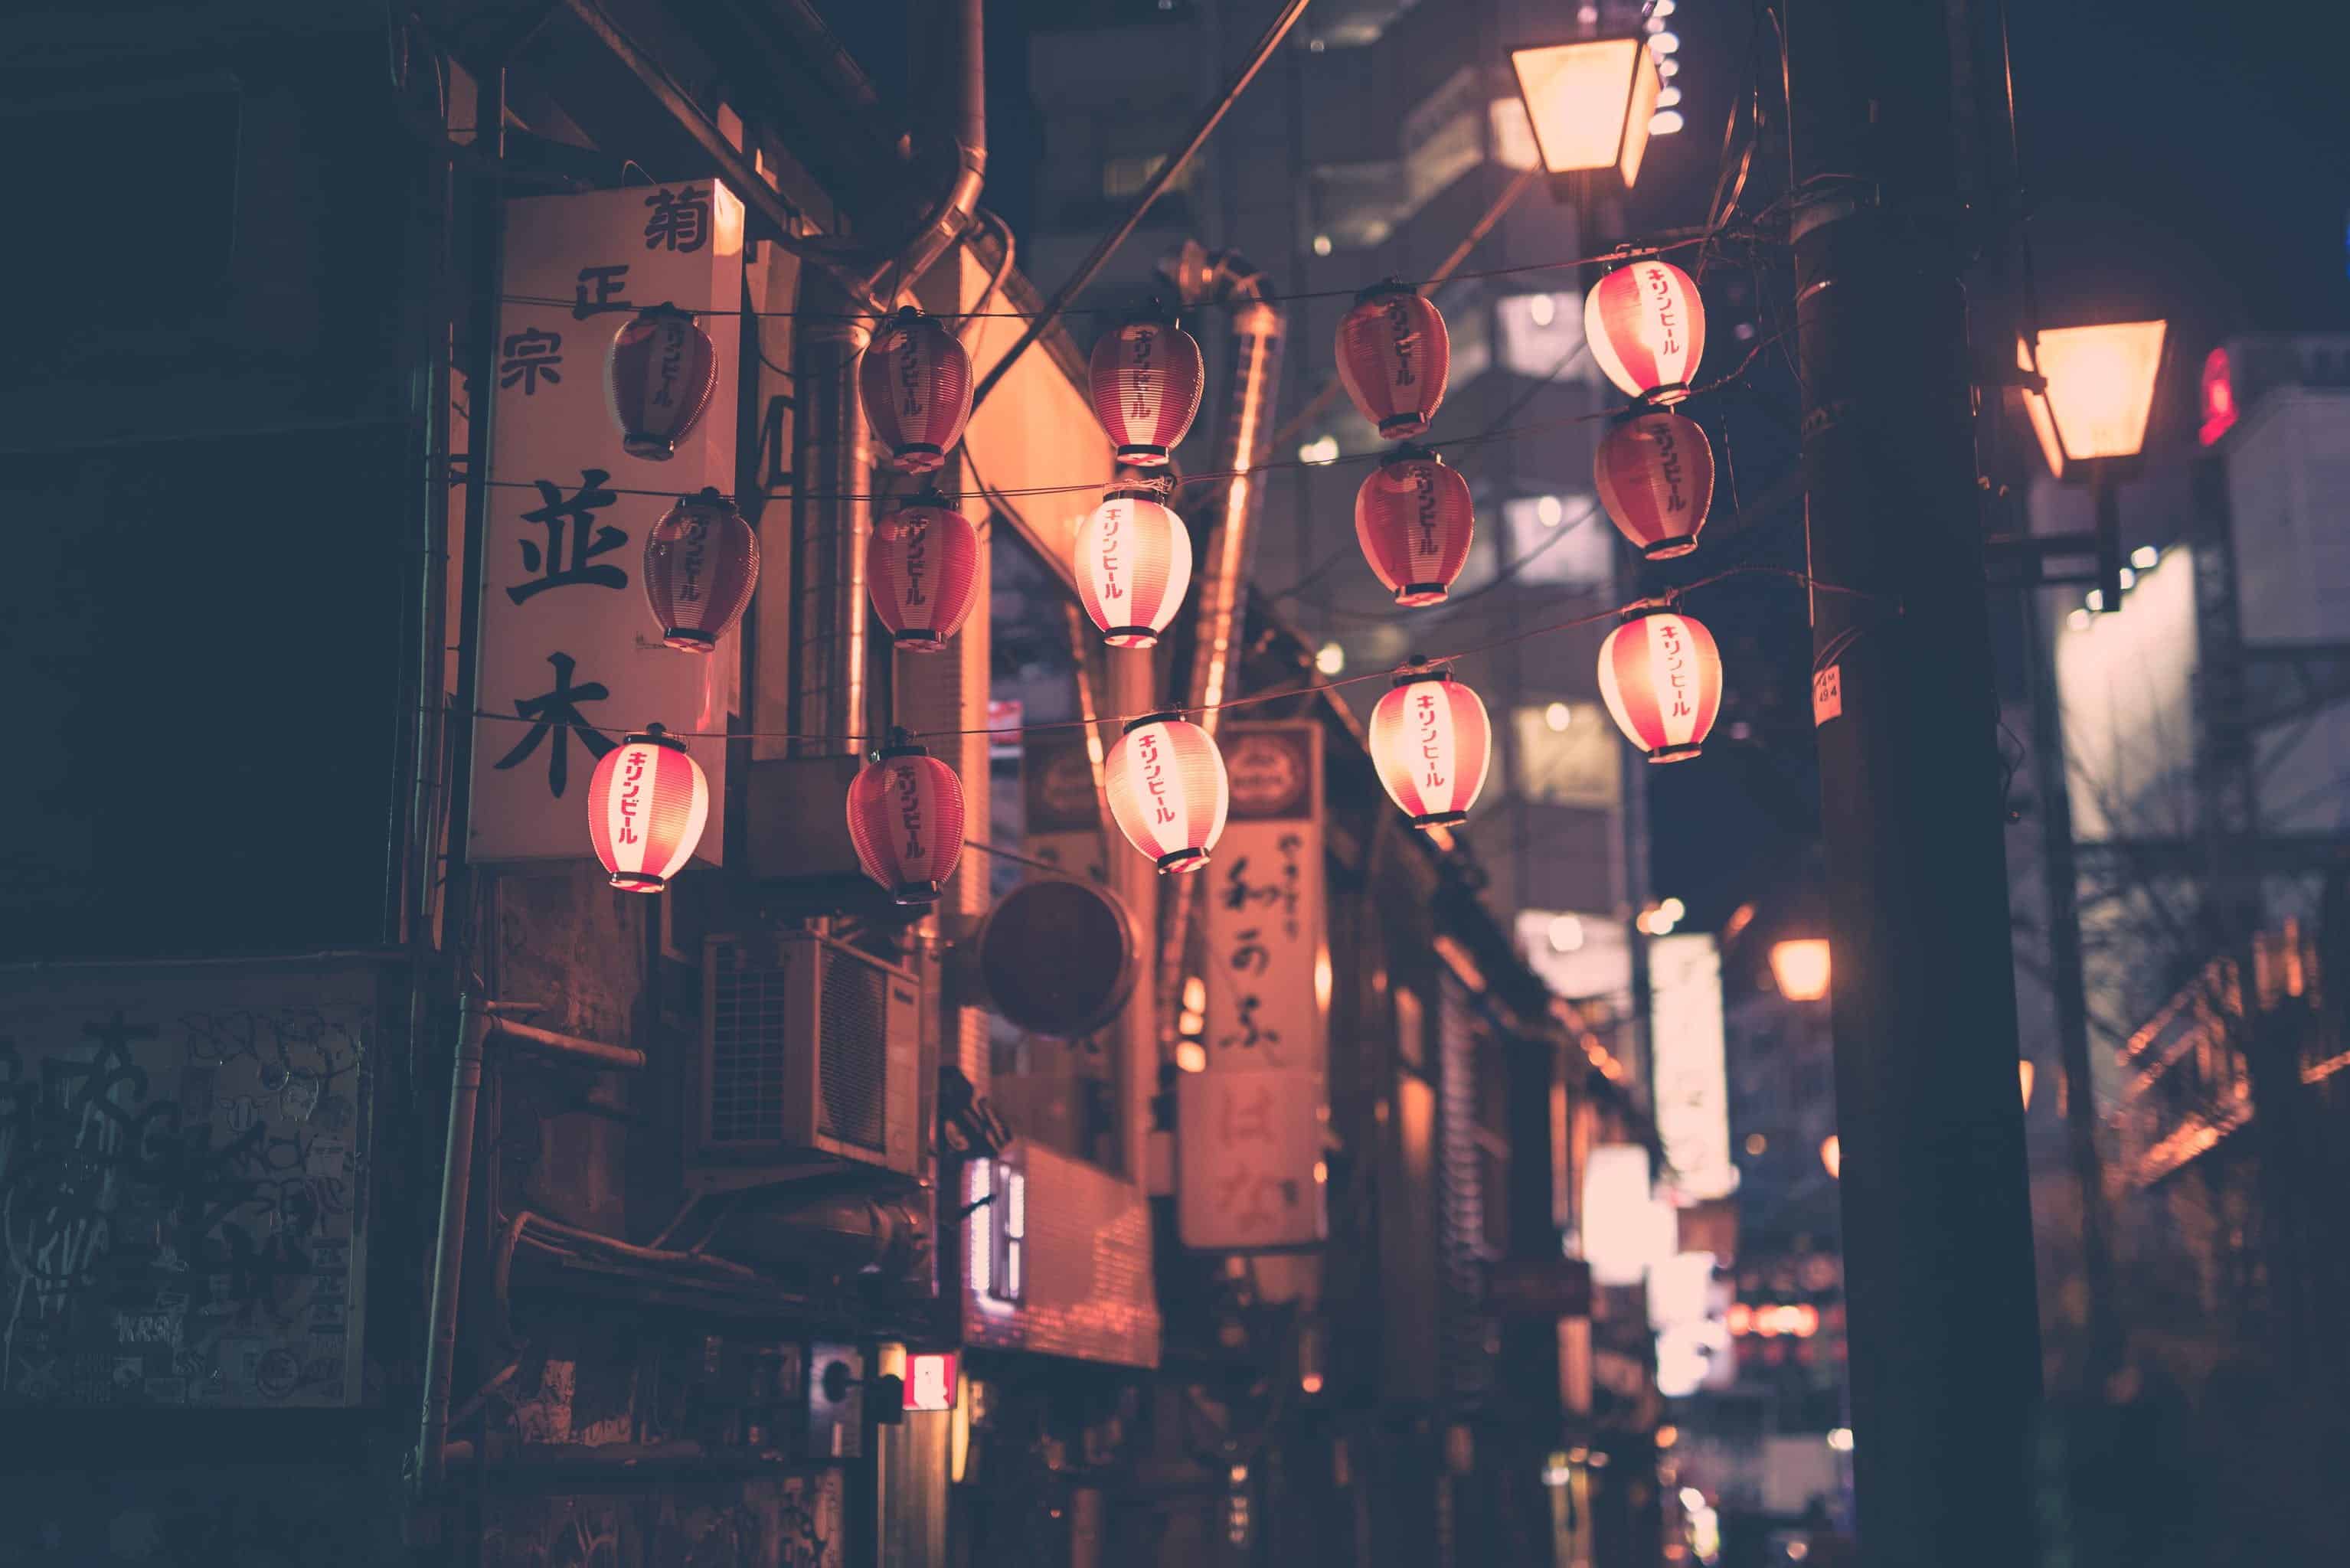 Illuminated Japanese paper lanterns line a street